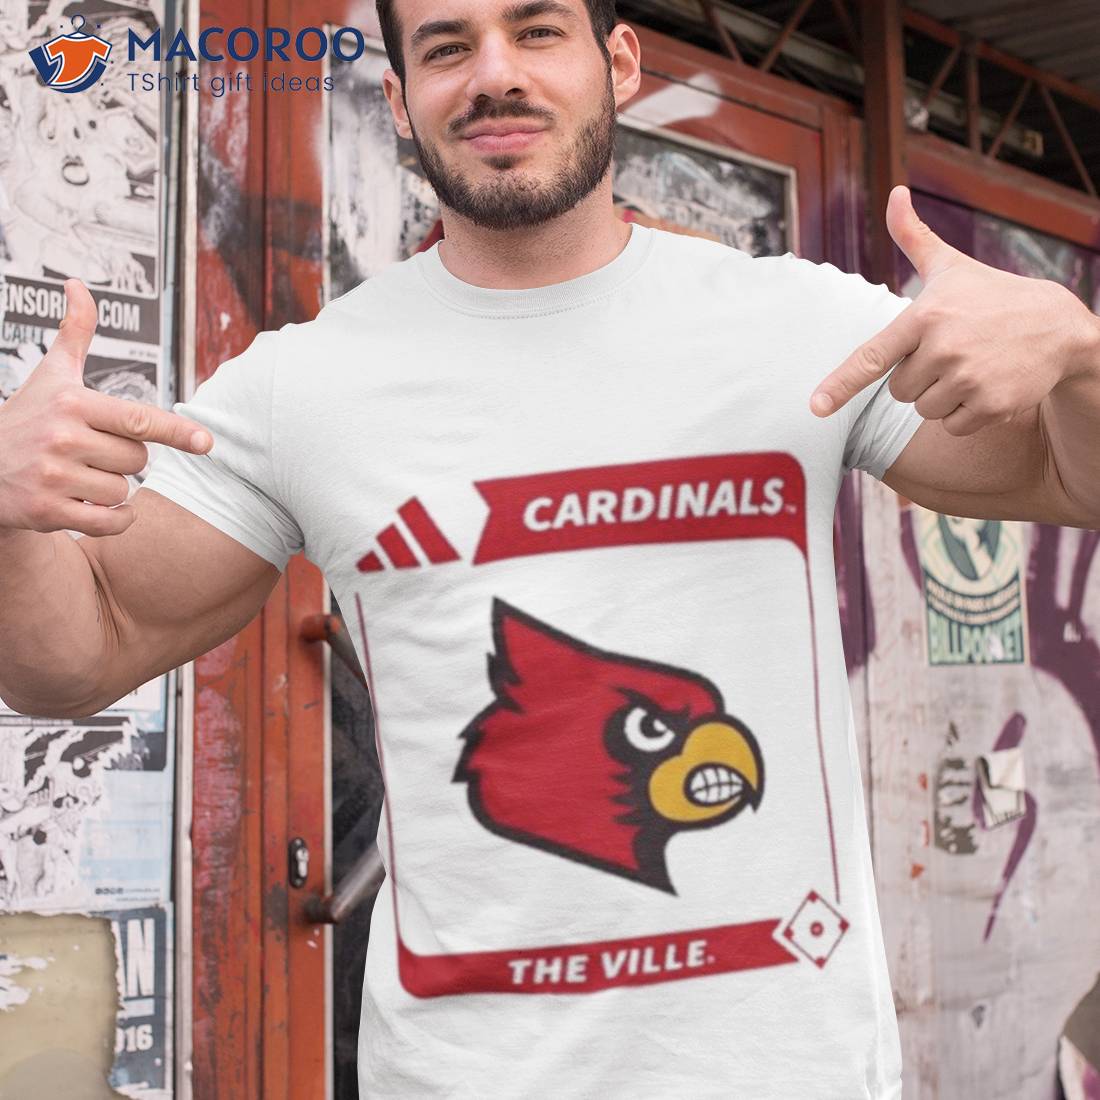 Louisville Cardinals Apparel & Gear